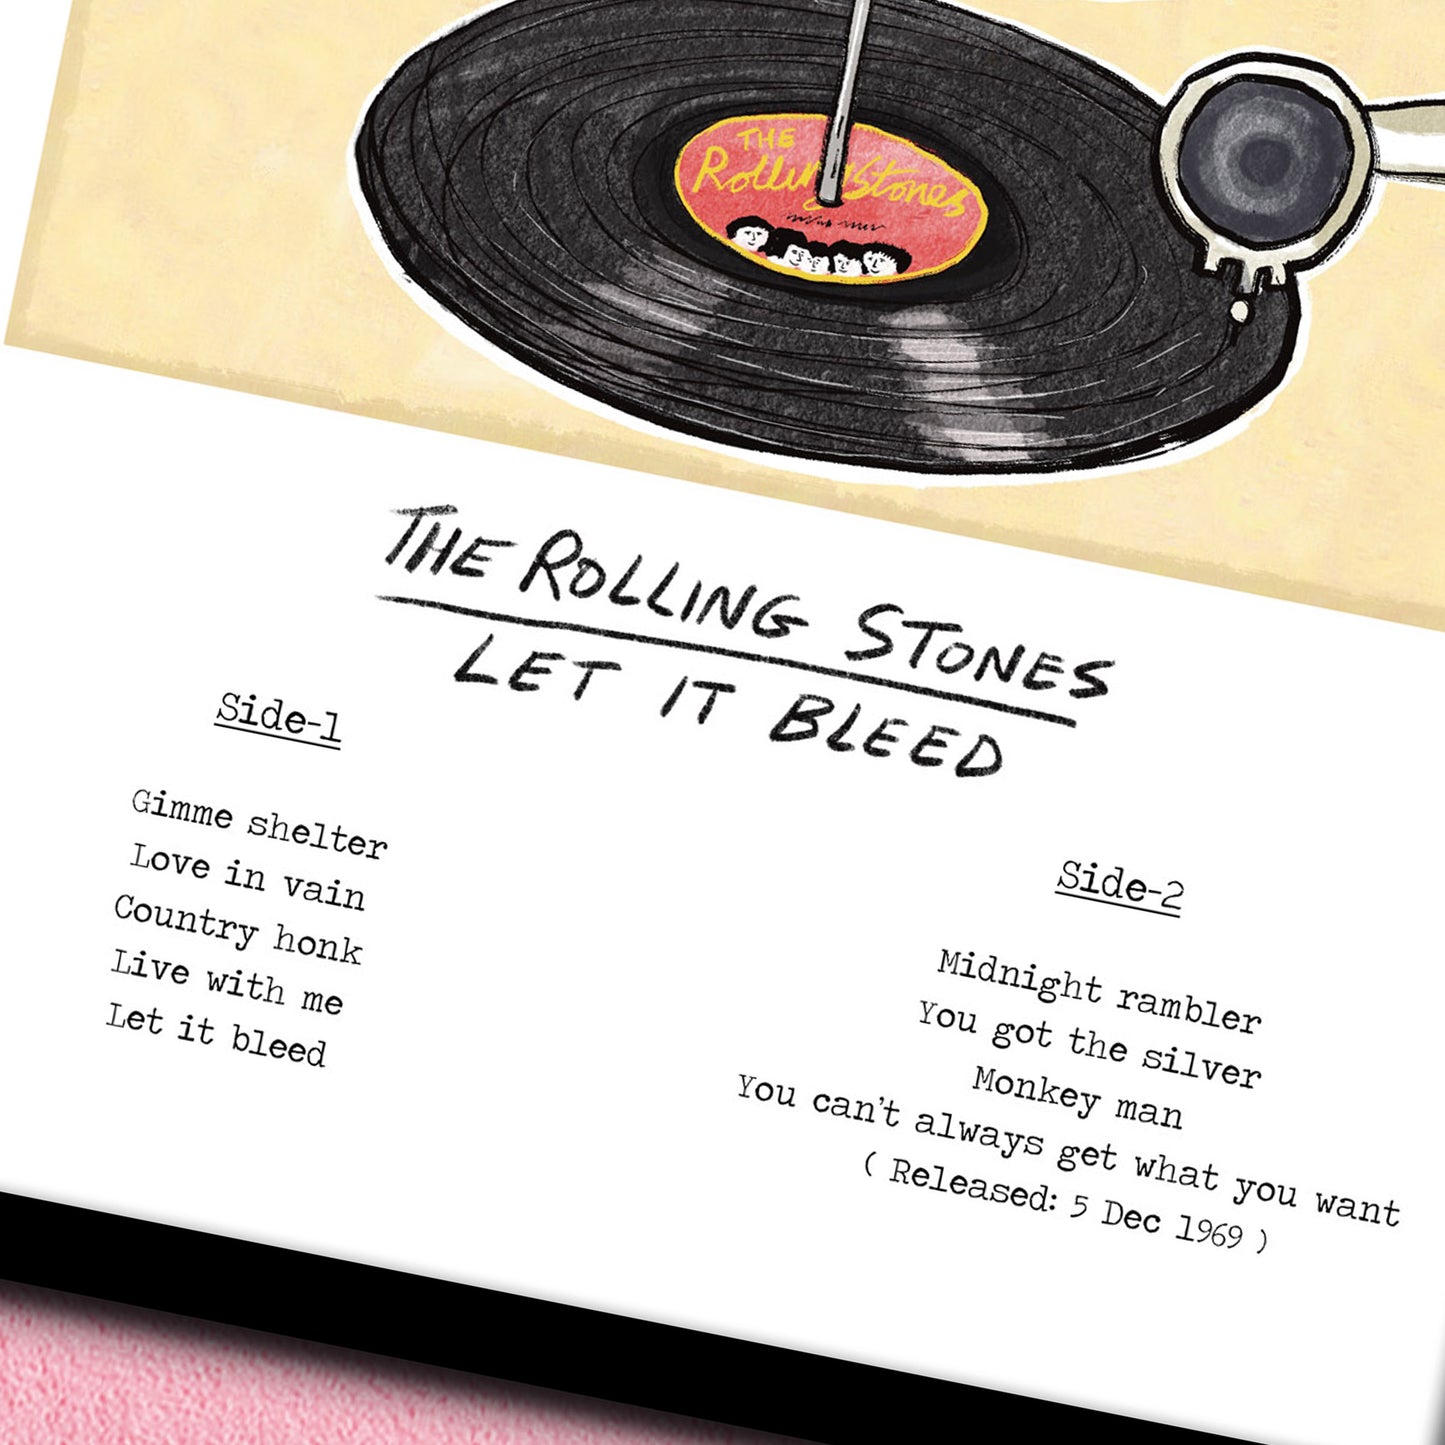 Rolling Stones - Let it Bleed print